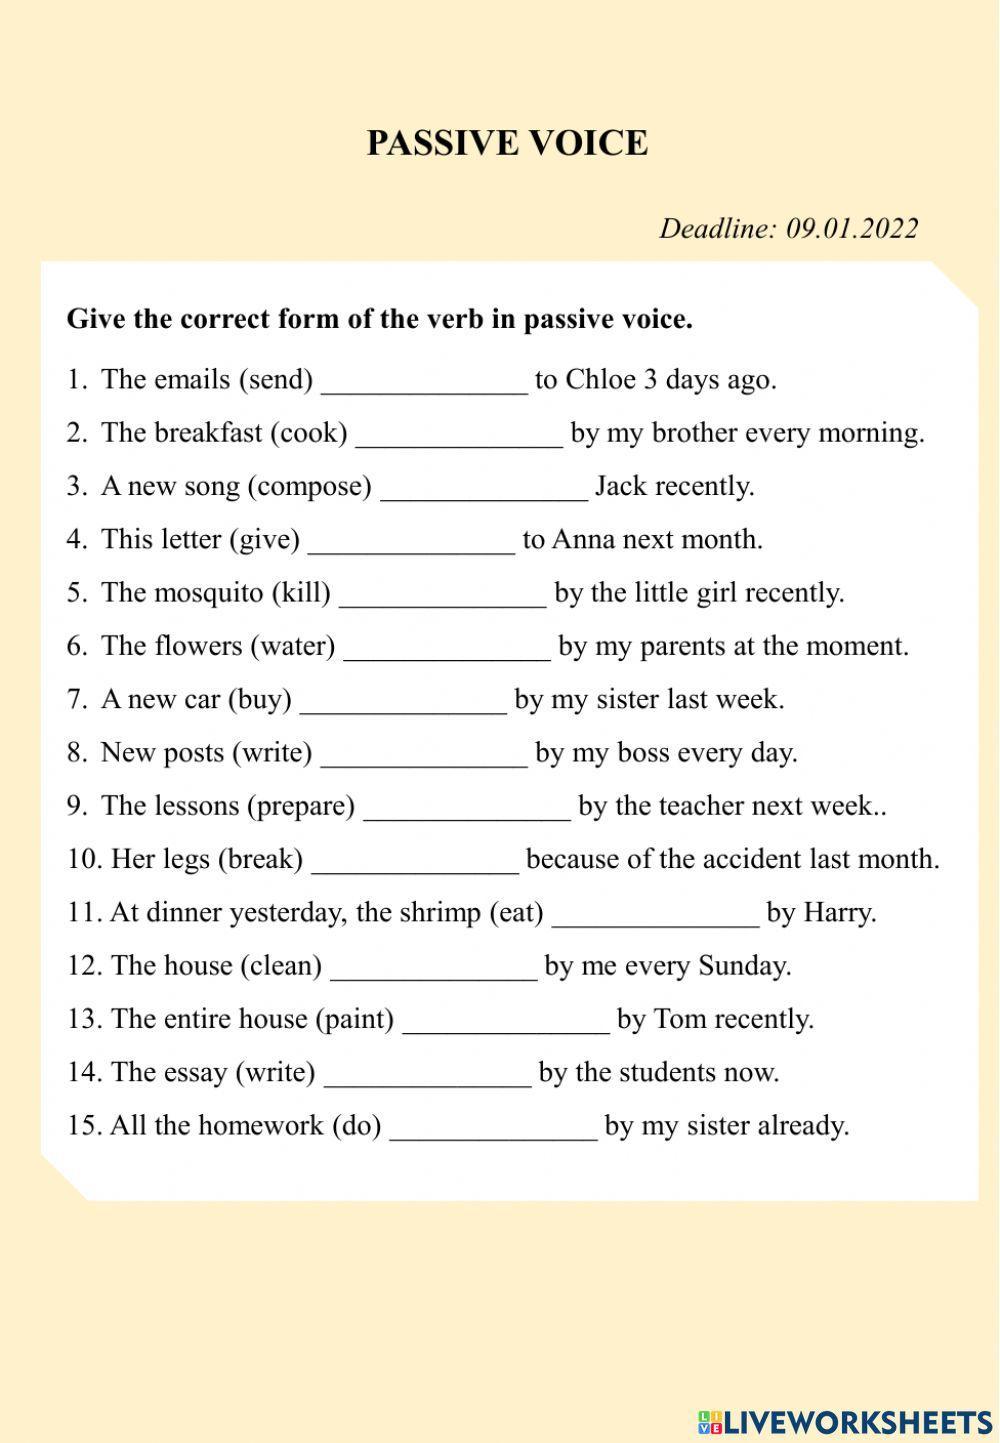 Passive voice - Worksheet 1